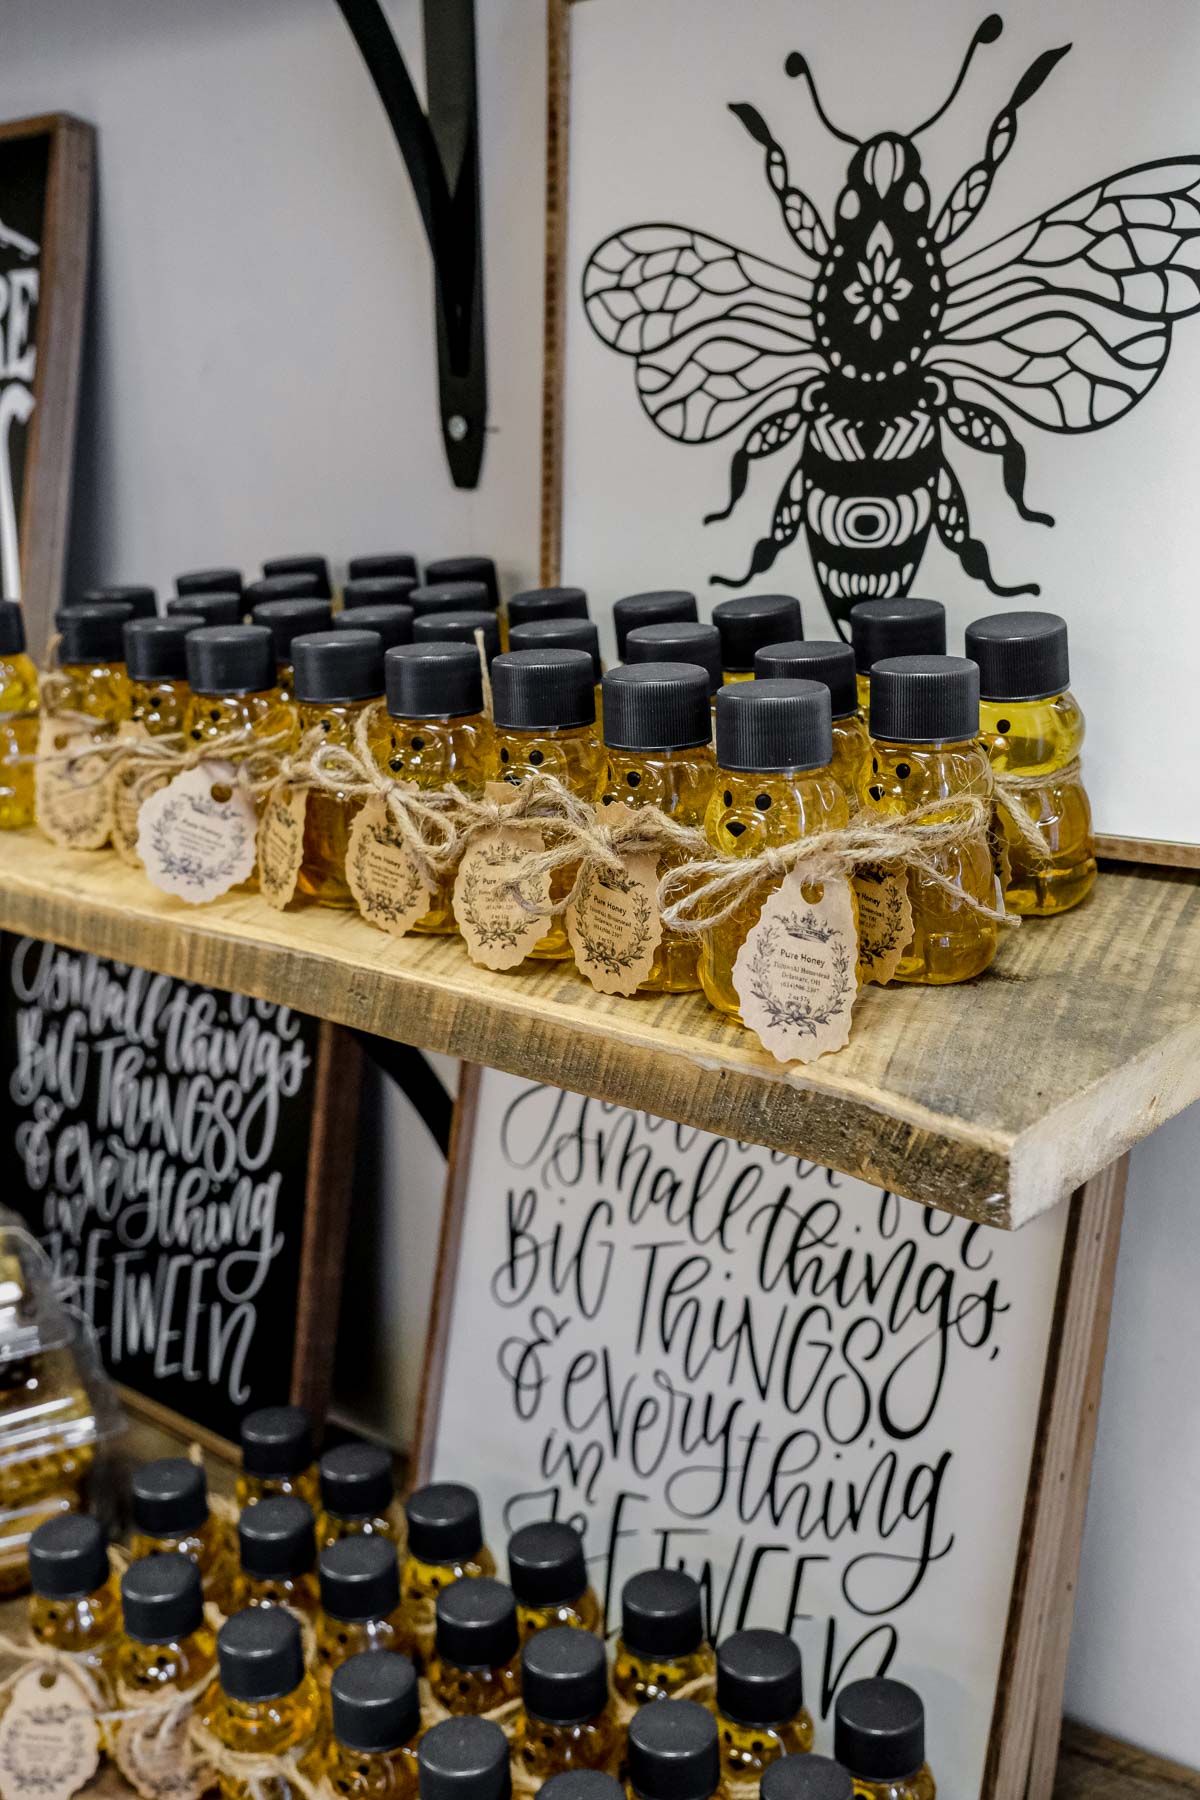 a wall full of fresh local honey in bottles